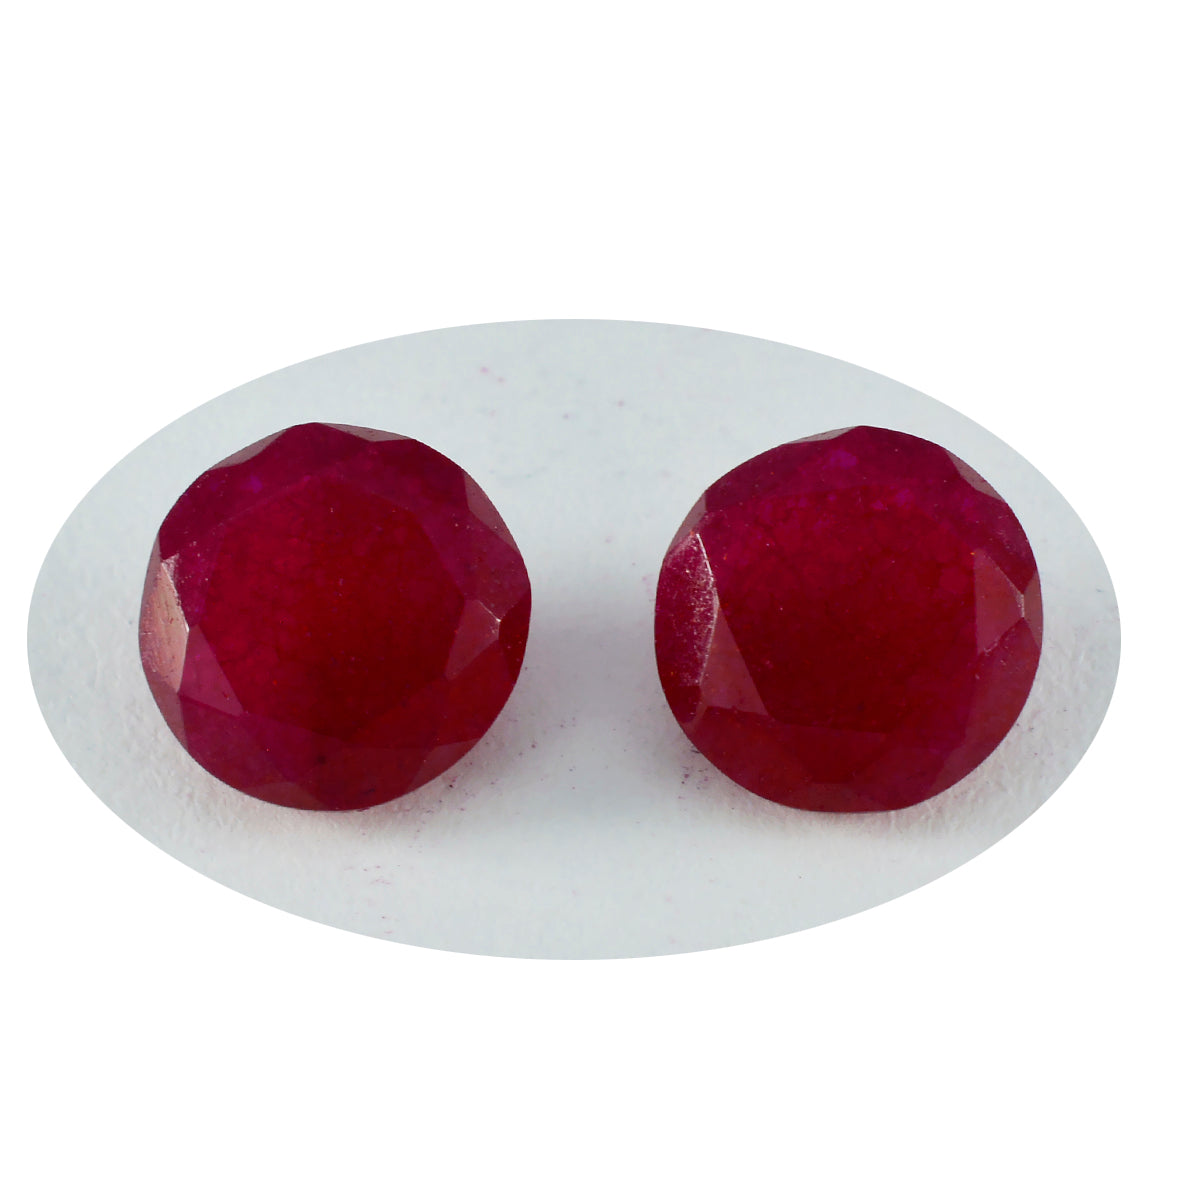 Riyogems 1PC Genuine Red Jasper Faceted 9x9 mm Round Shape cute Quality Loose Gems